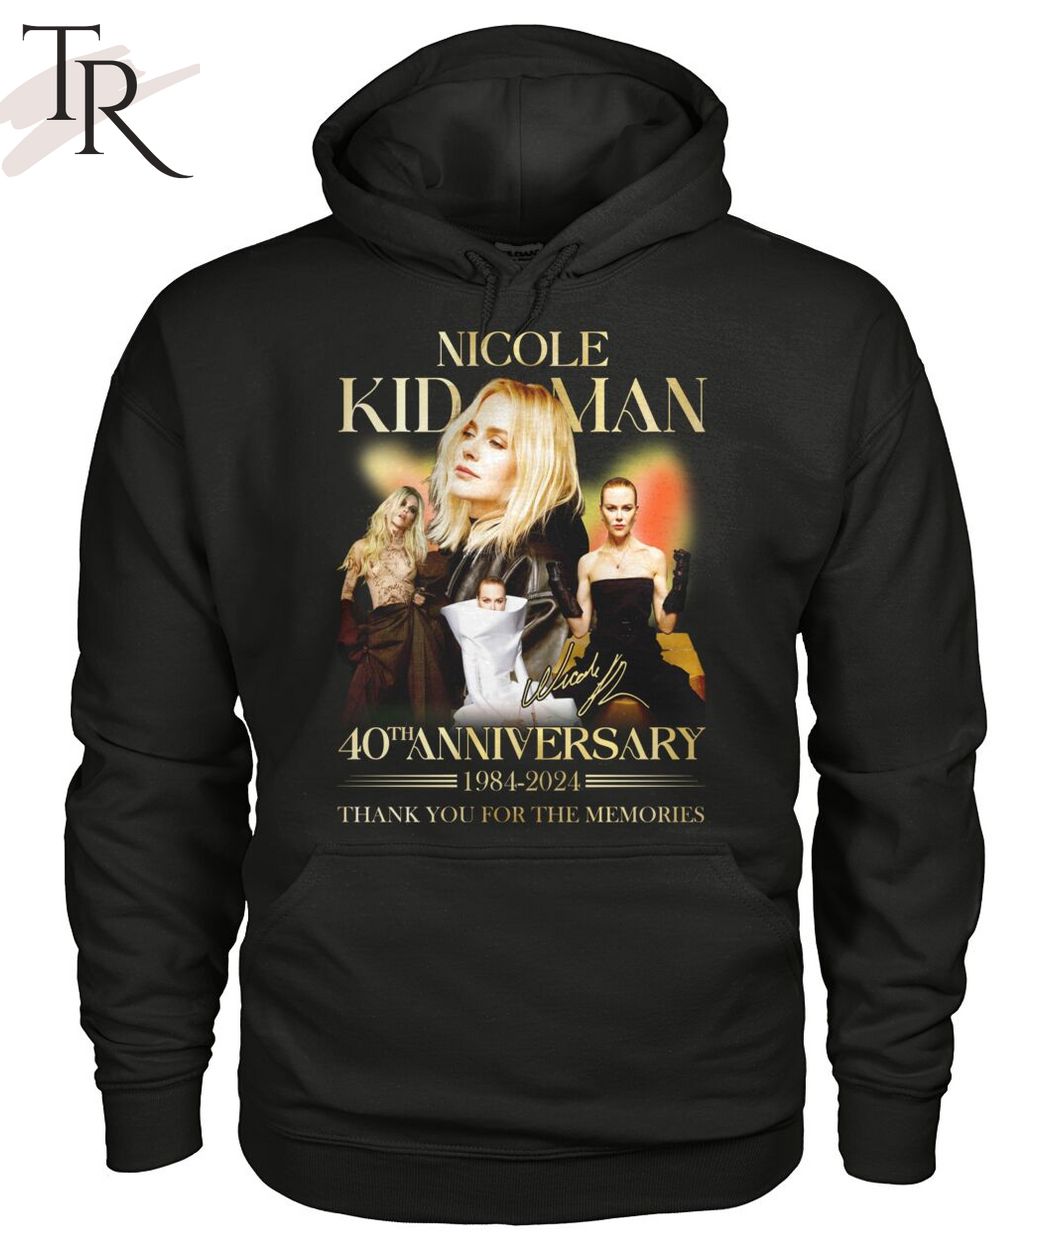 Nicole Kidman 40th Anniversary 1984-2024 Thank You For The Memories T-Shirt